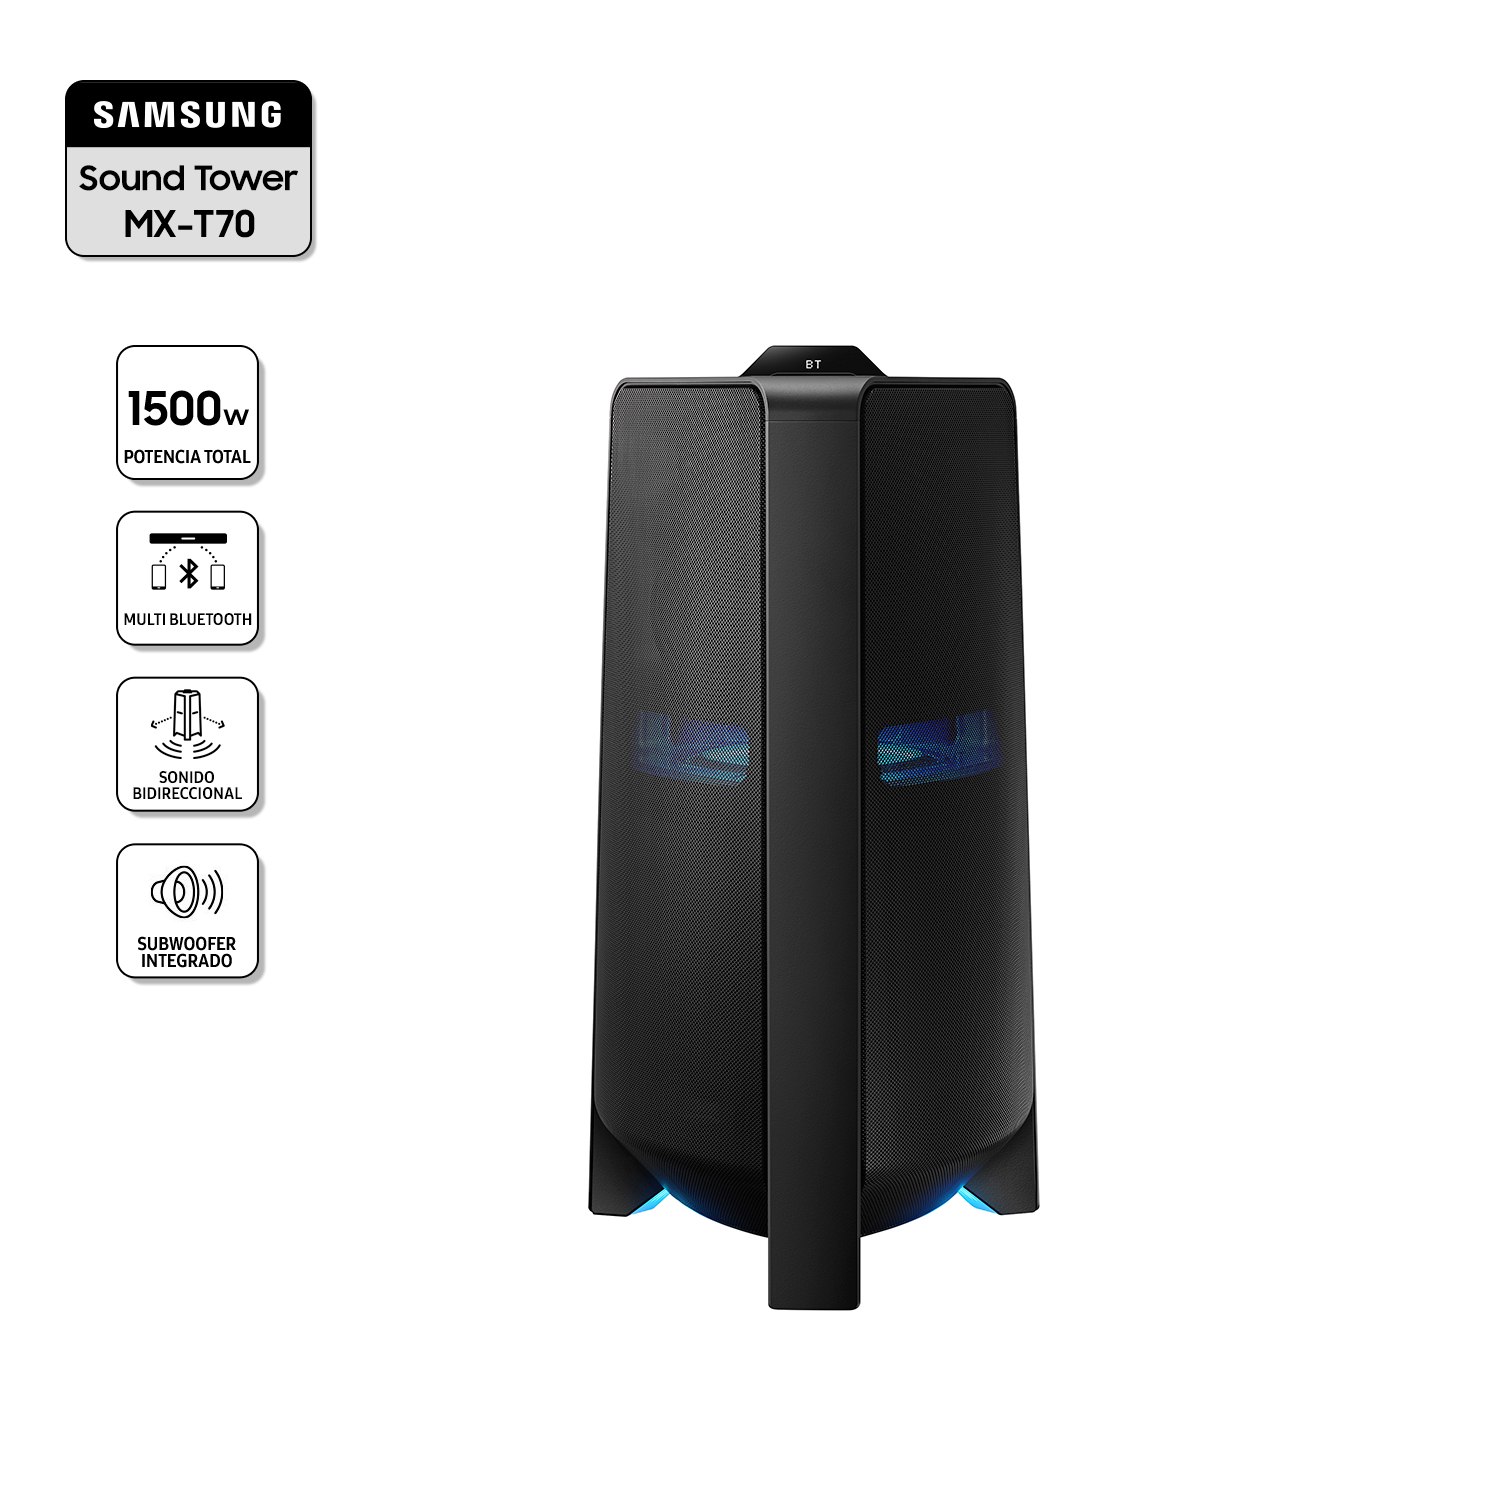 Minicomponente Samsung Sound Tower MX-T70/ZS en Oferta